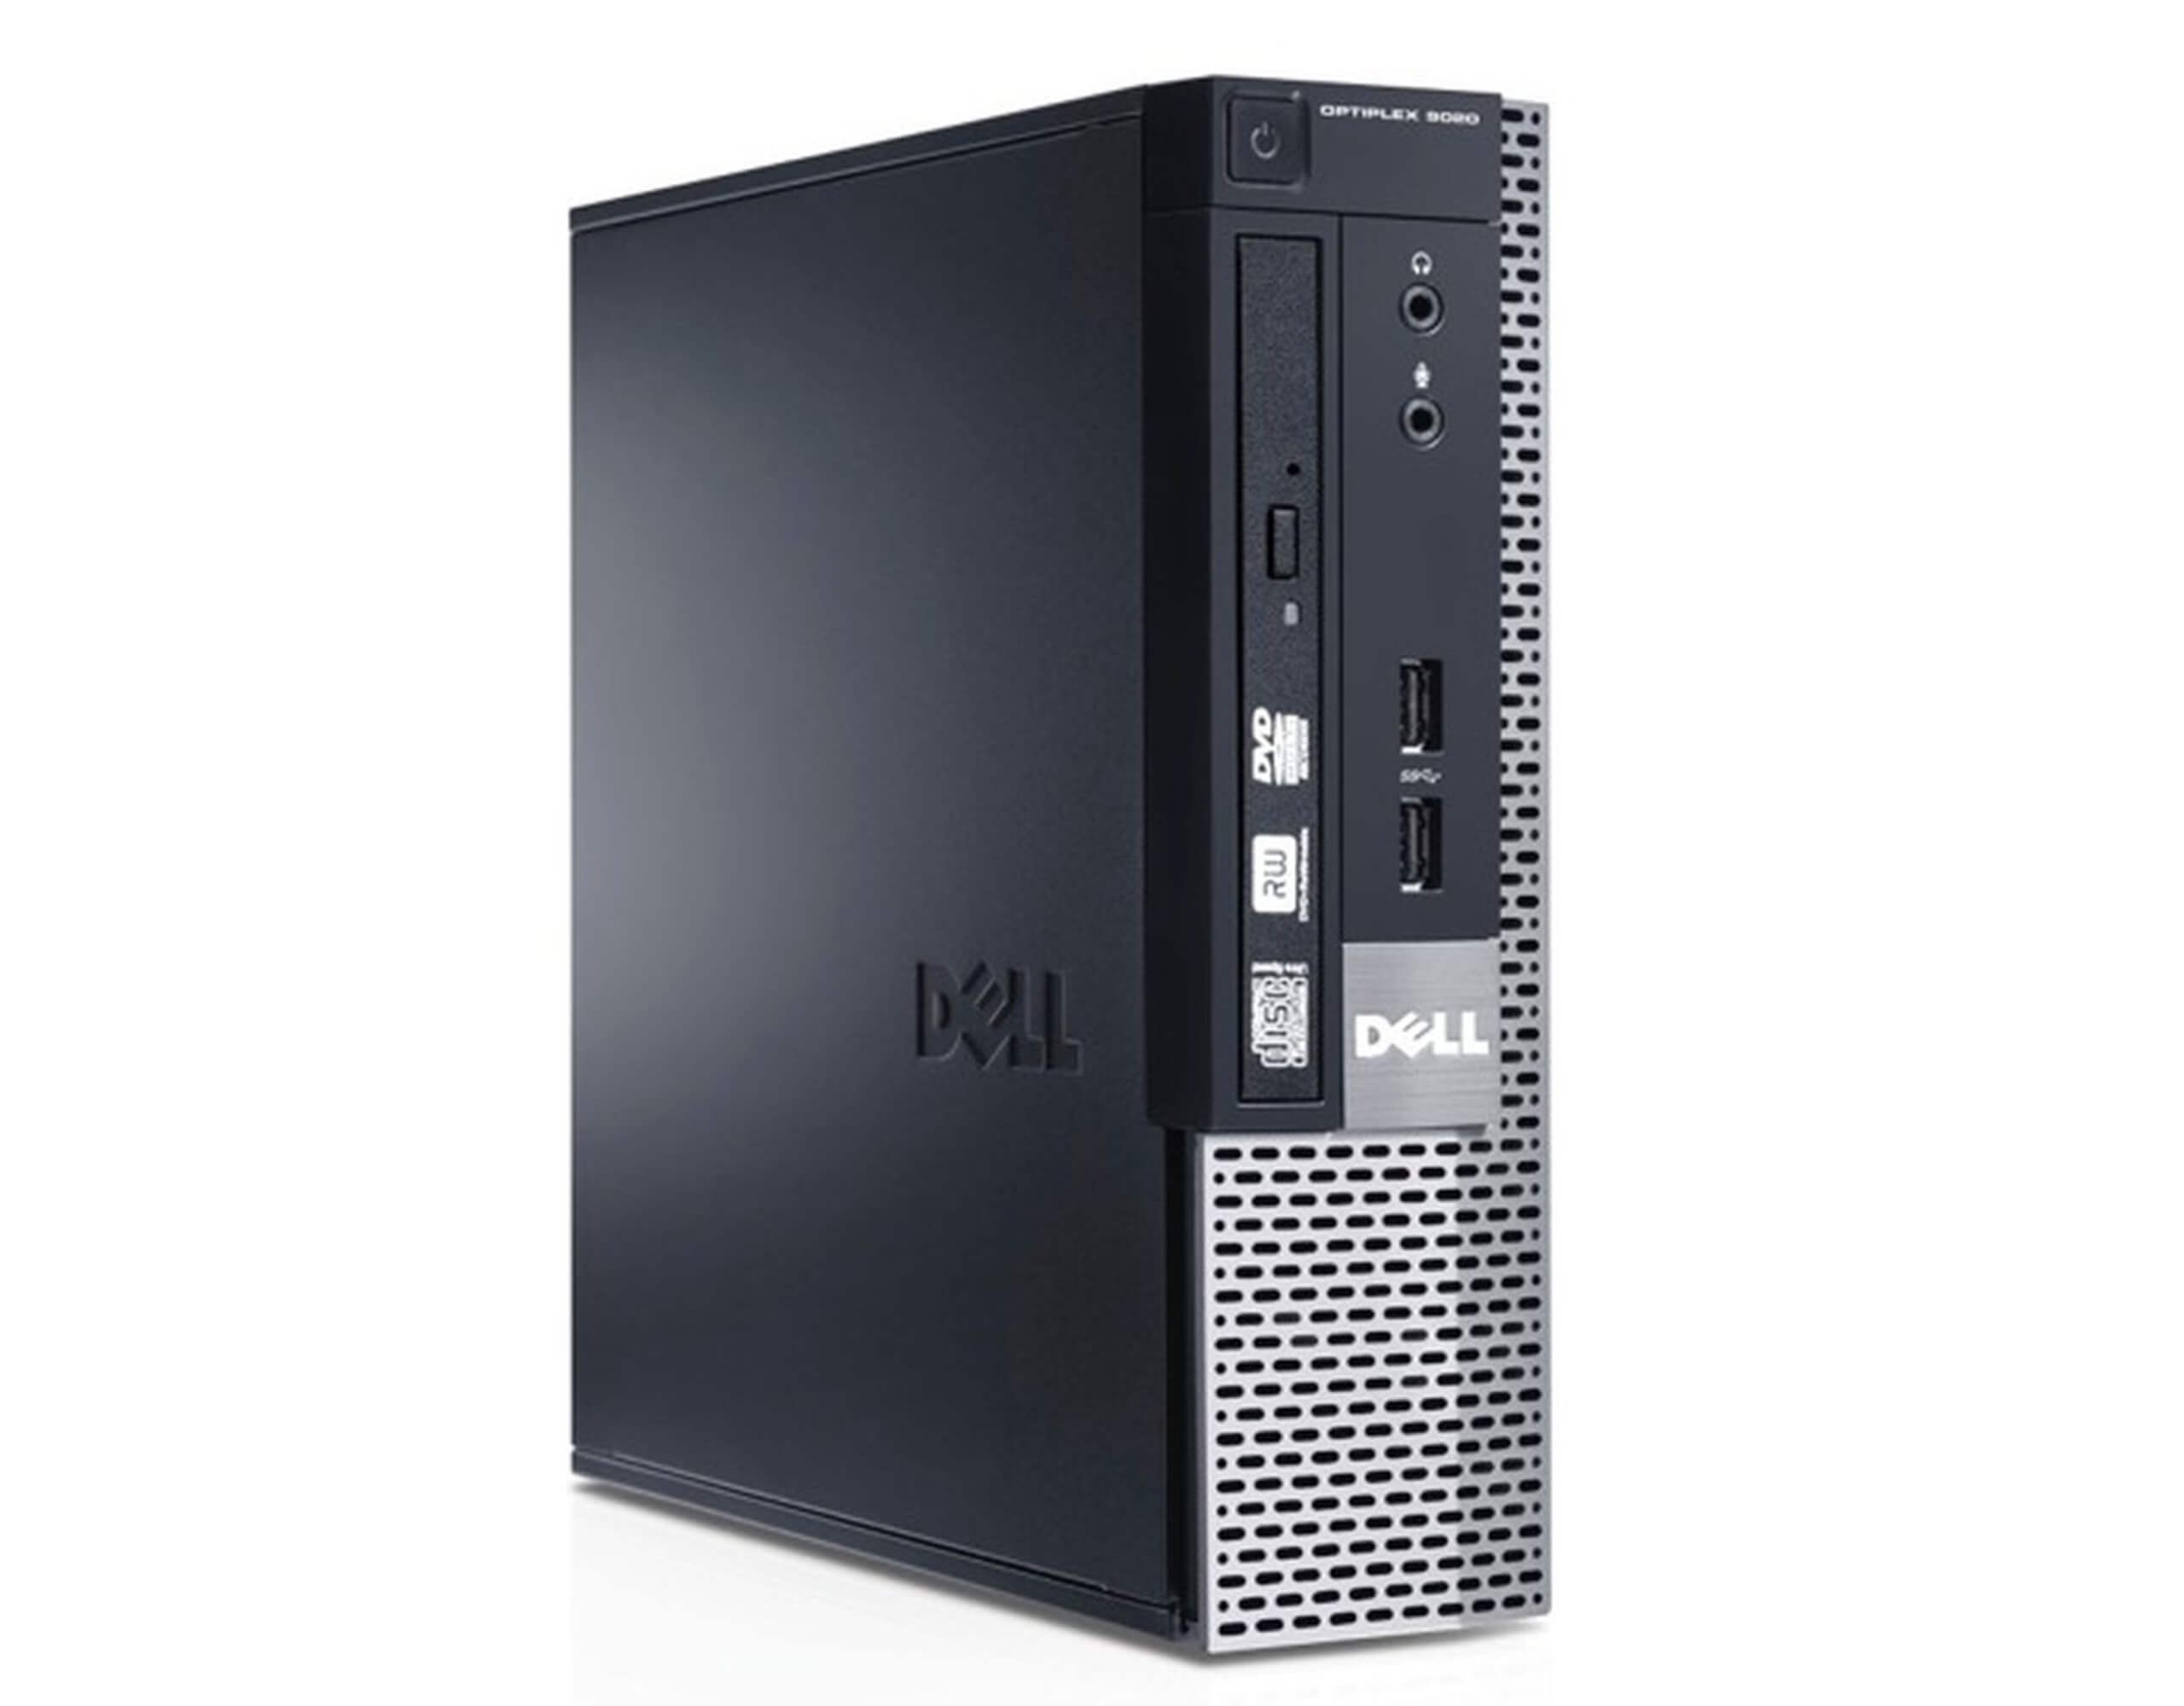 DELL 9020 USFF I5-4590S 3.0 / 8192 MB DDR3 / 512 GB SSD NOWY / DVD-RW / WINDOWS 10 HOME